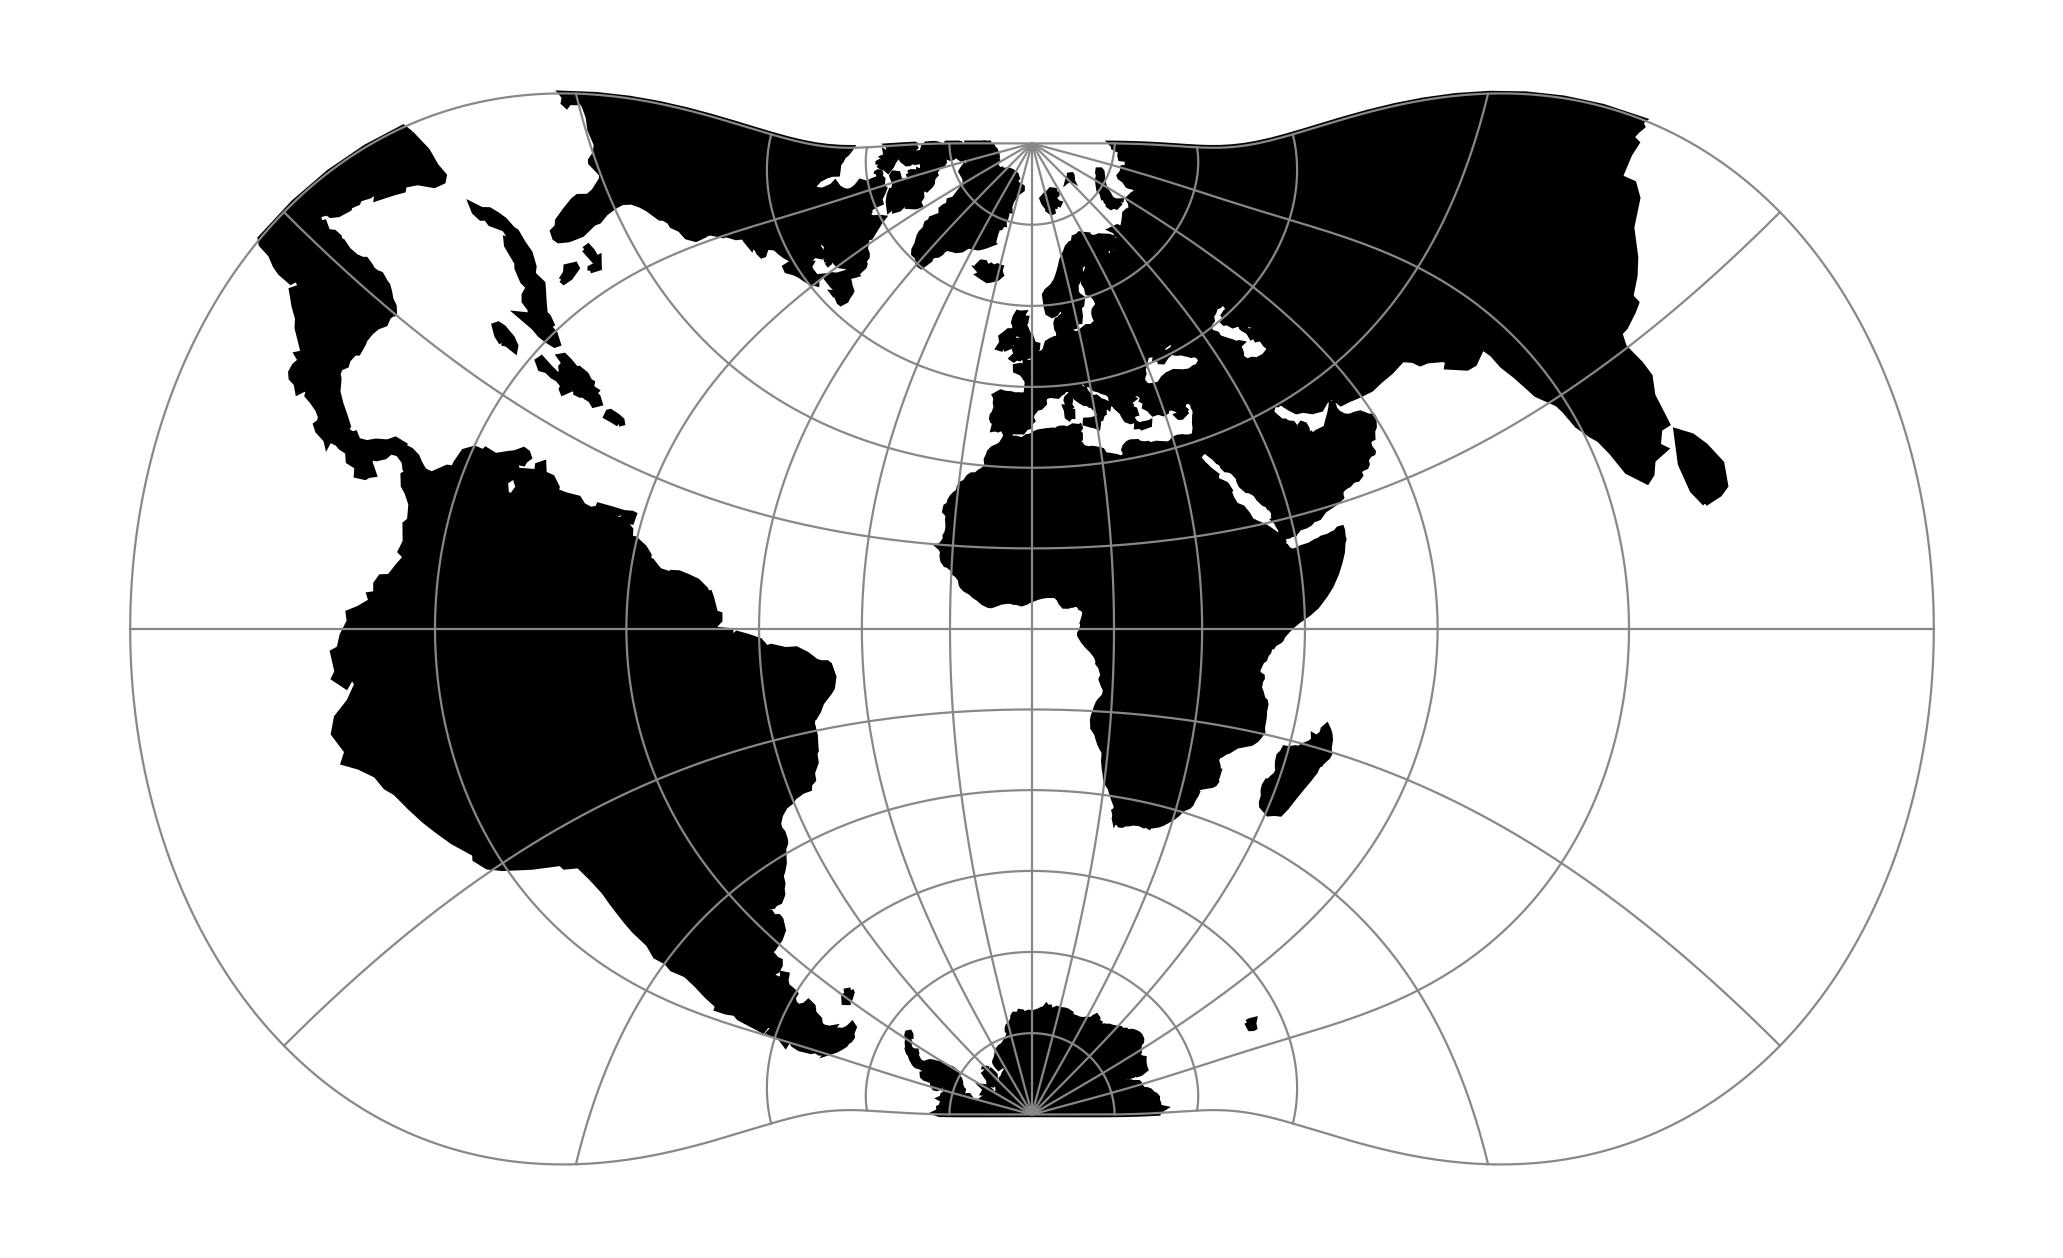 Transverse Mercator